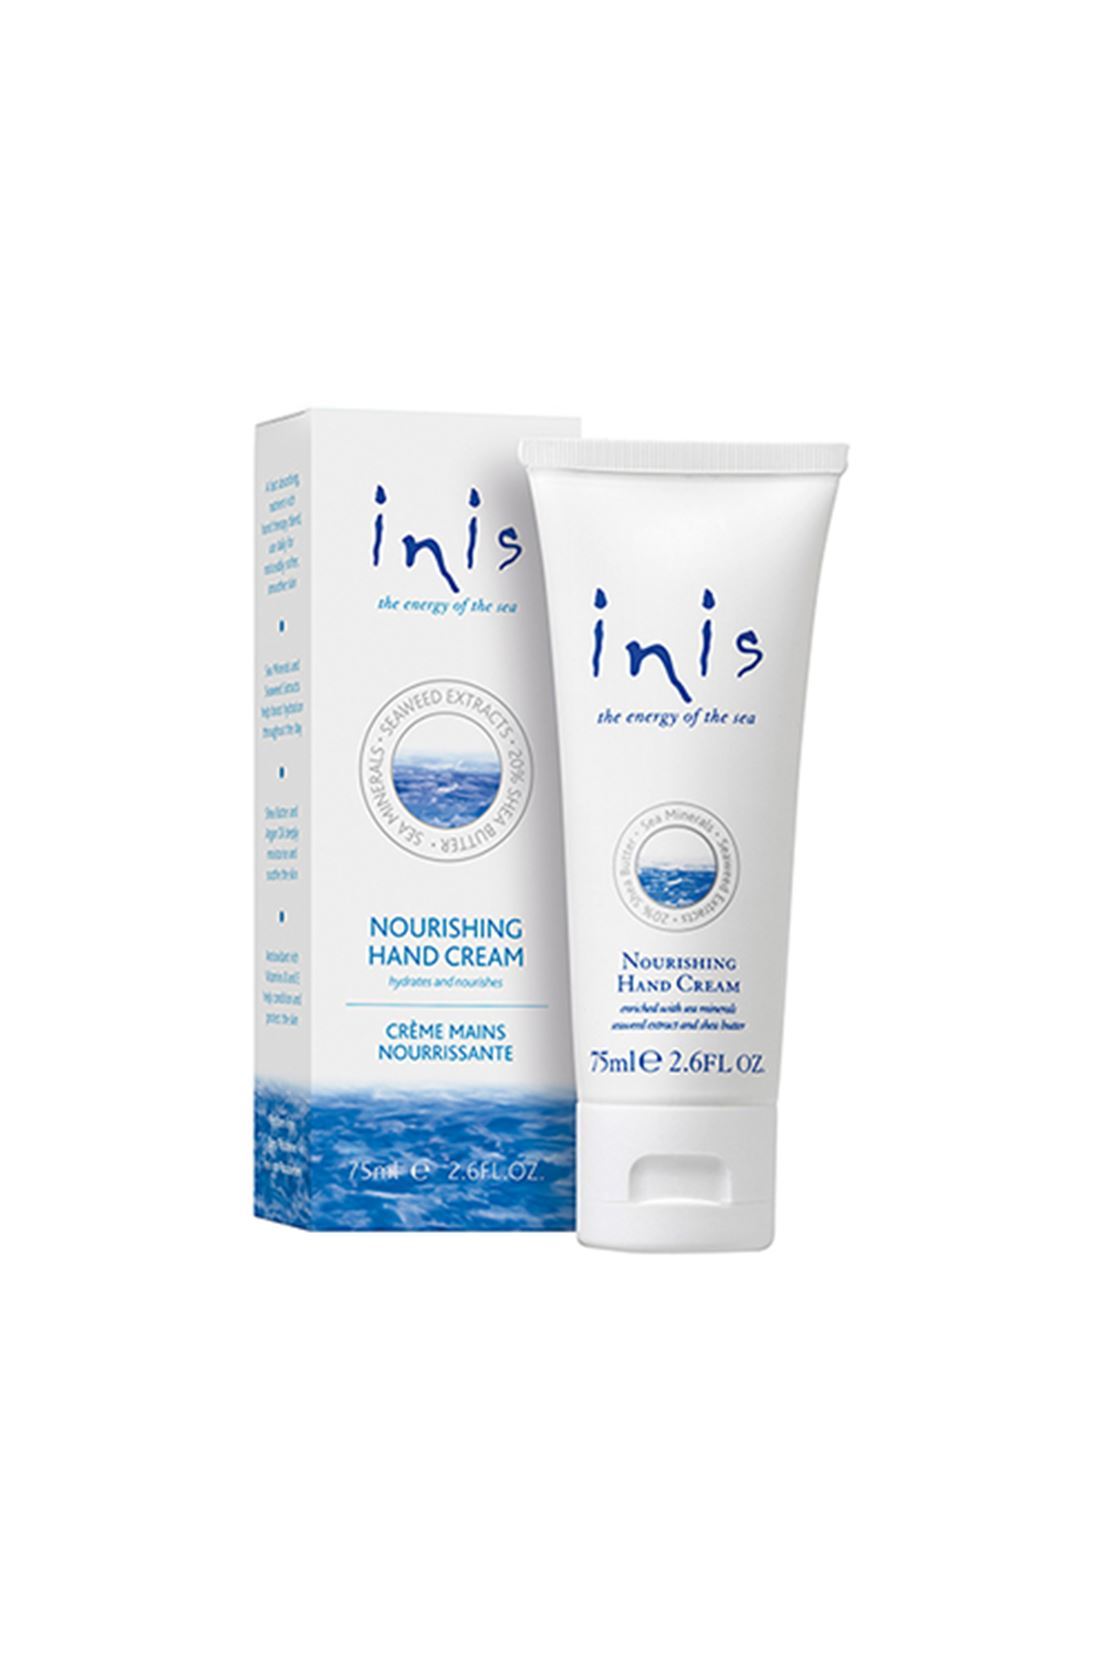 Inis Energy of the Sea Hand Cream 2.6 oz.